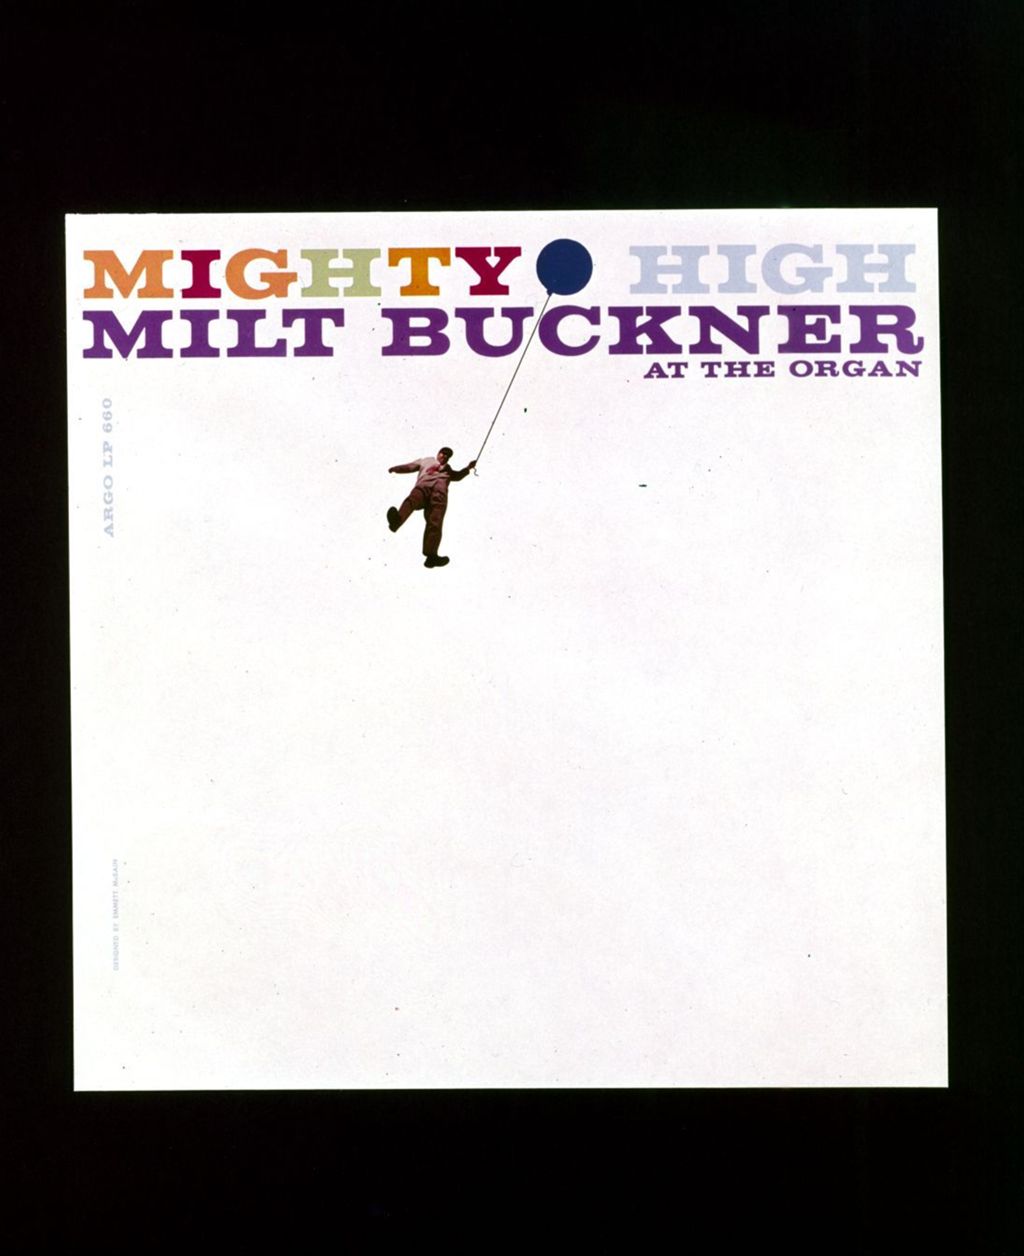 Miniature of Mighty High, Milt Buckner album cover